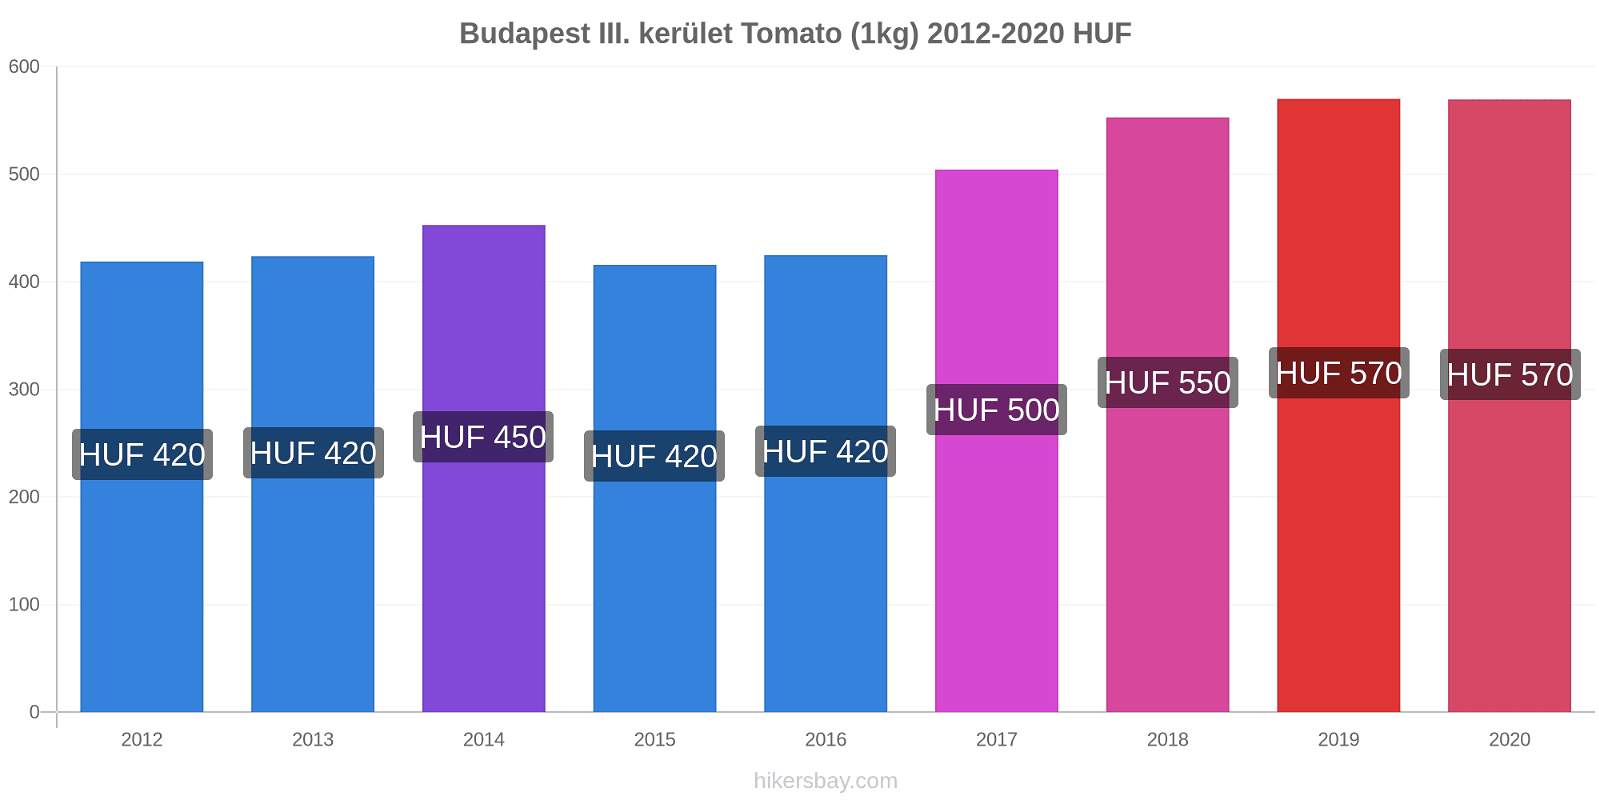 Budapest III. kerület price changes Tomato (1kg) hikersbay.com